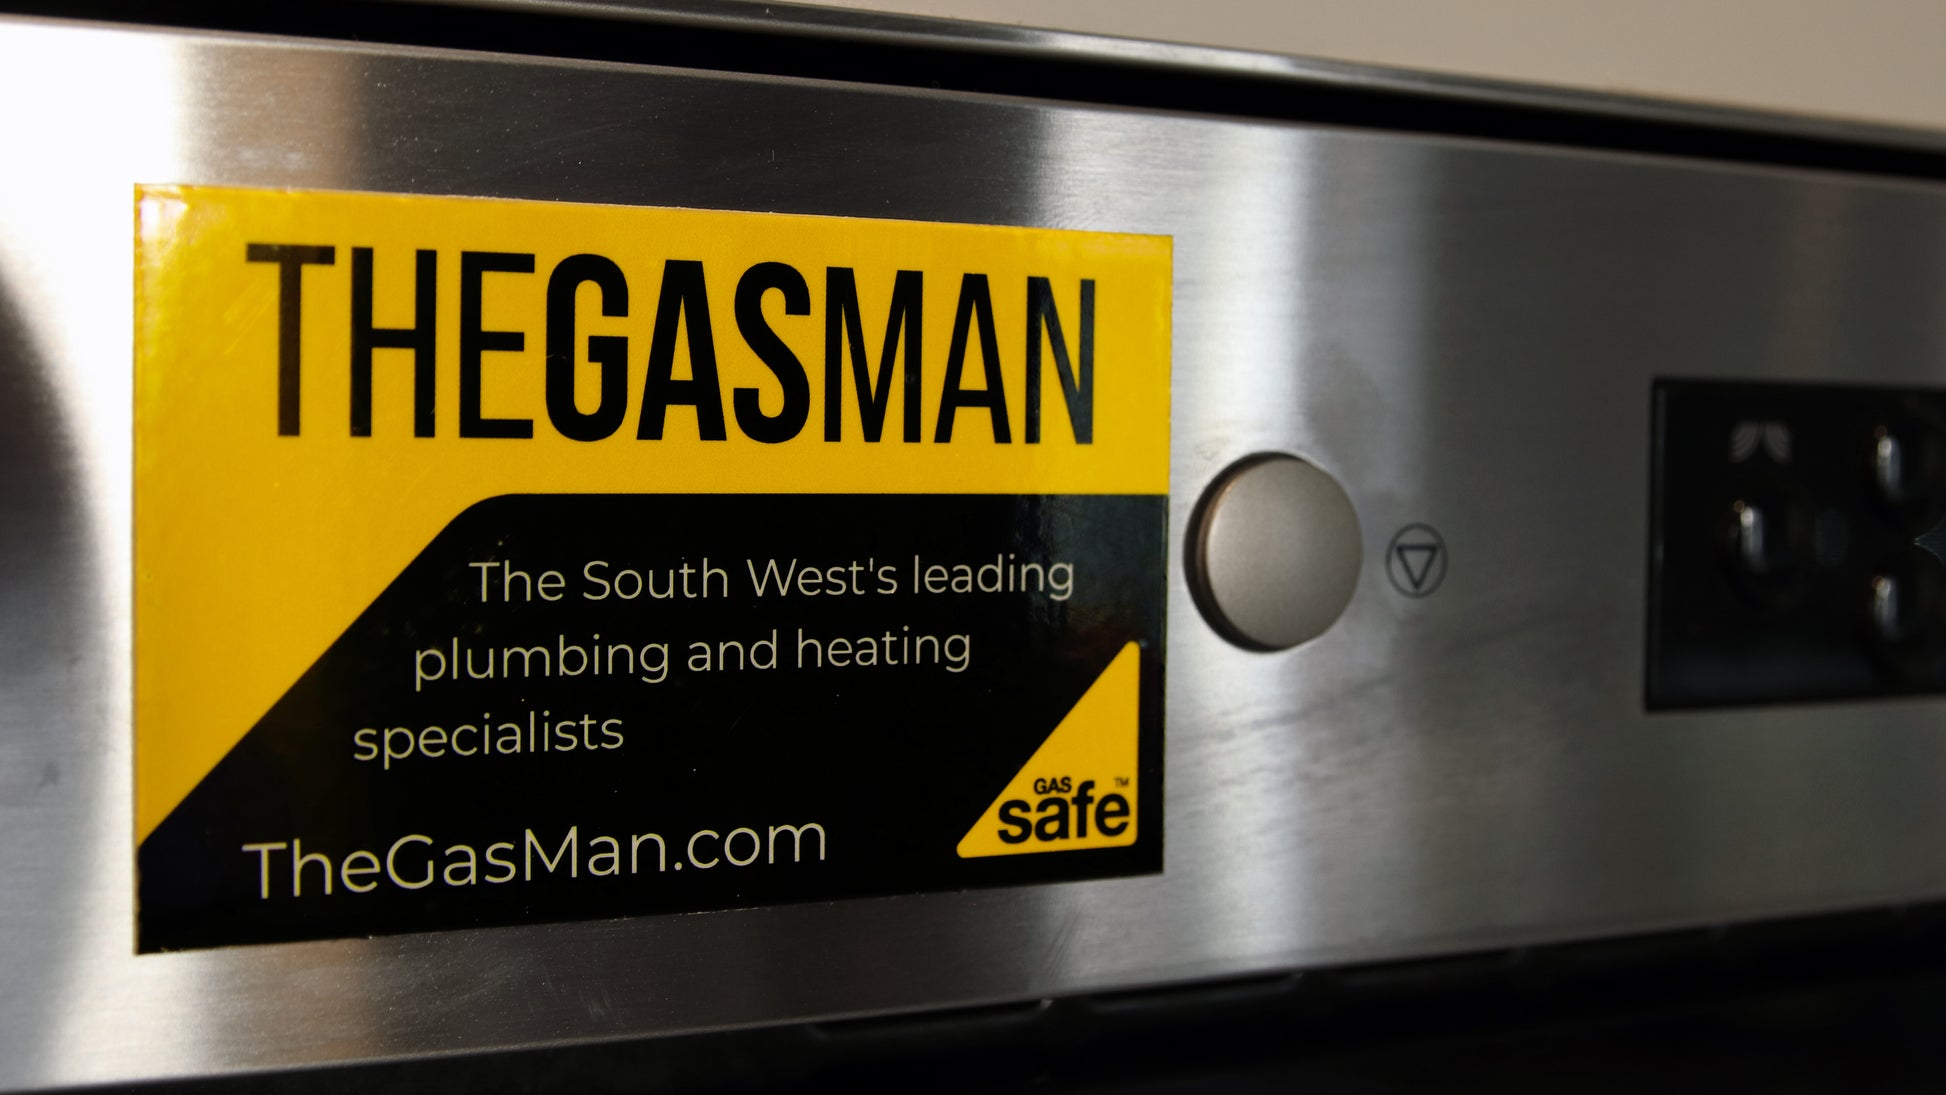 Rectangular custom printed magnet design with Gasman business card design